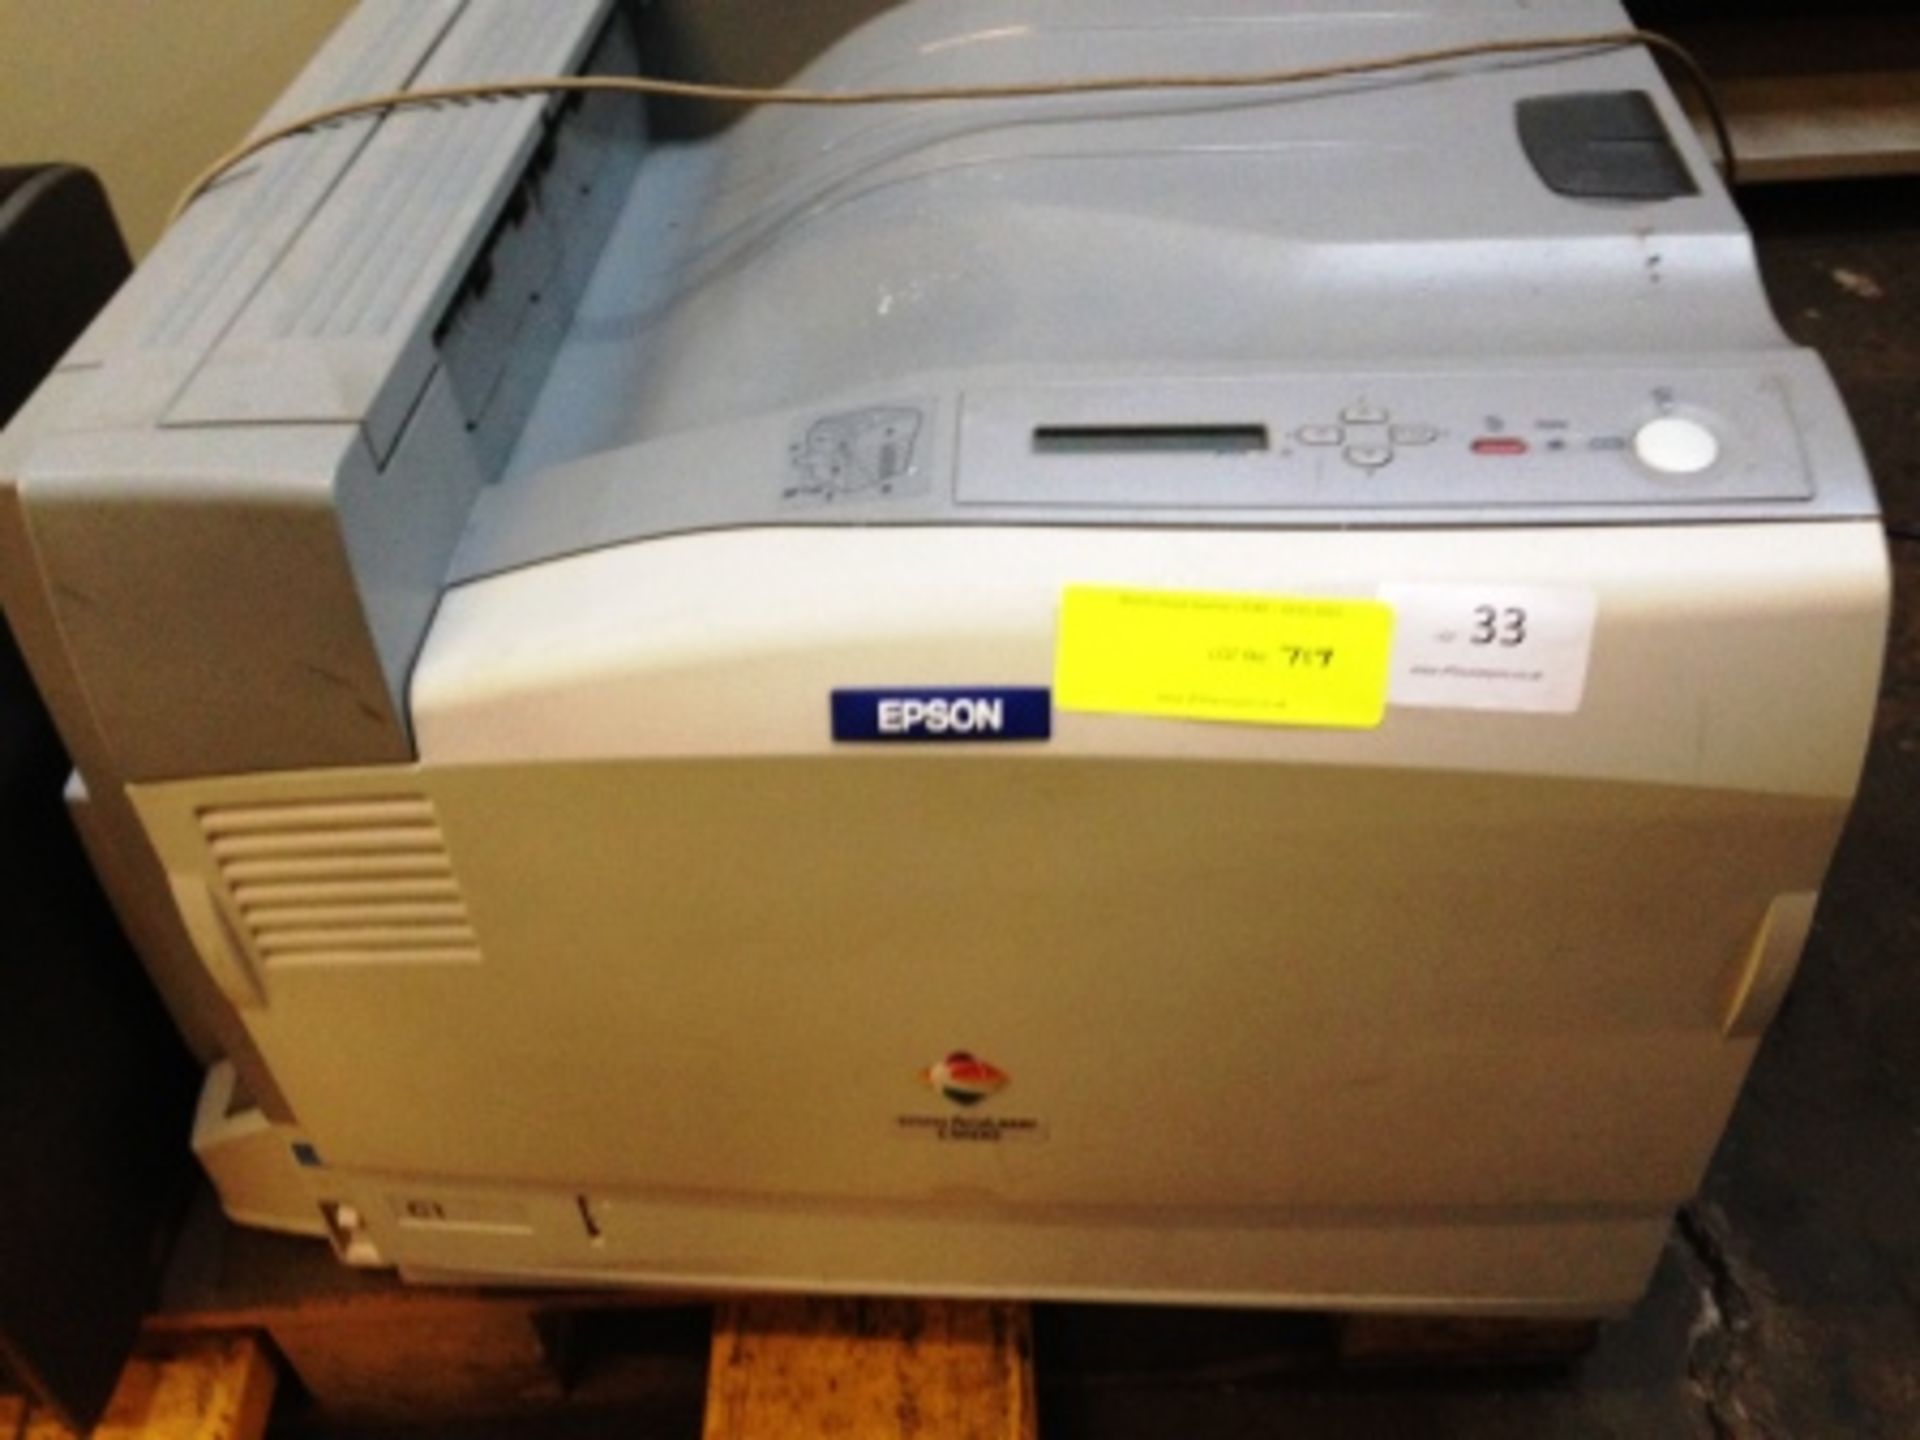 Epson colour printer Model: Aculaser C9100